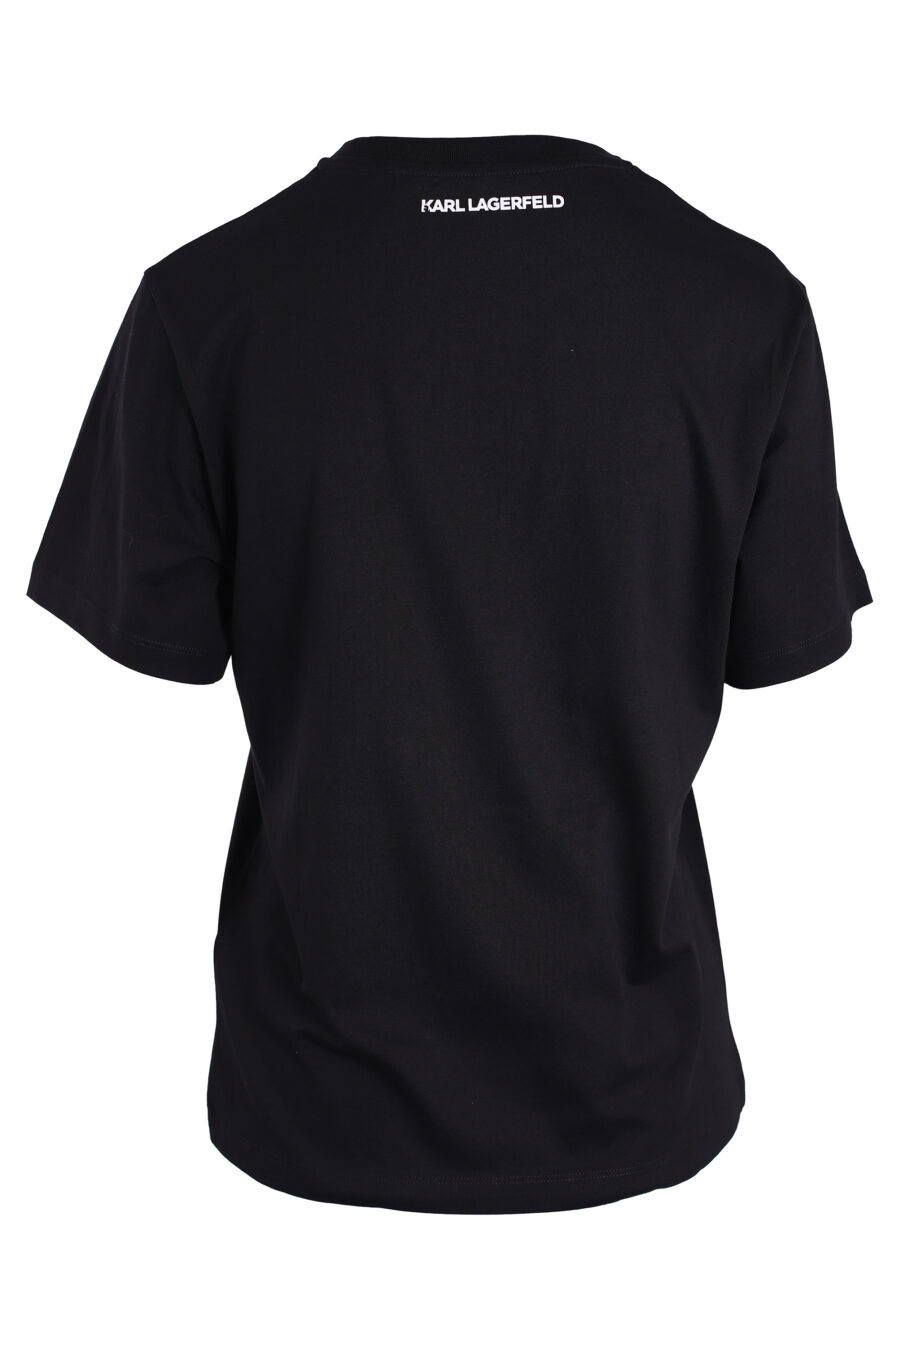 T-shirt black with white and green round logo "paris" - IMG 3358